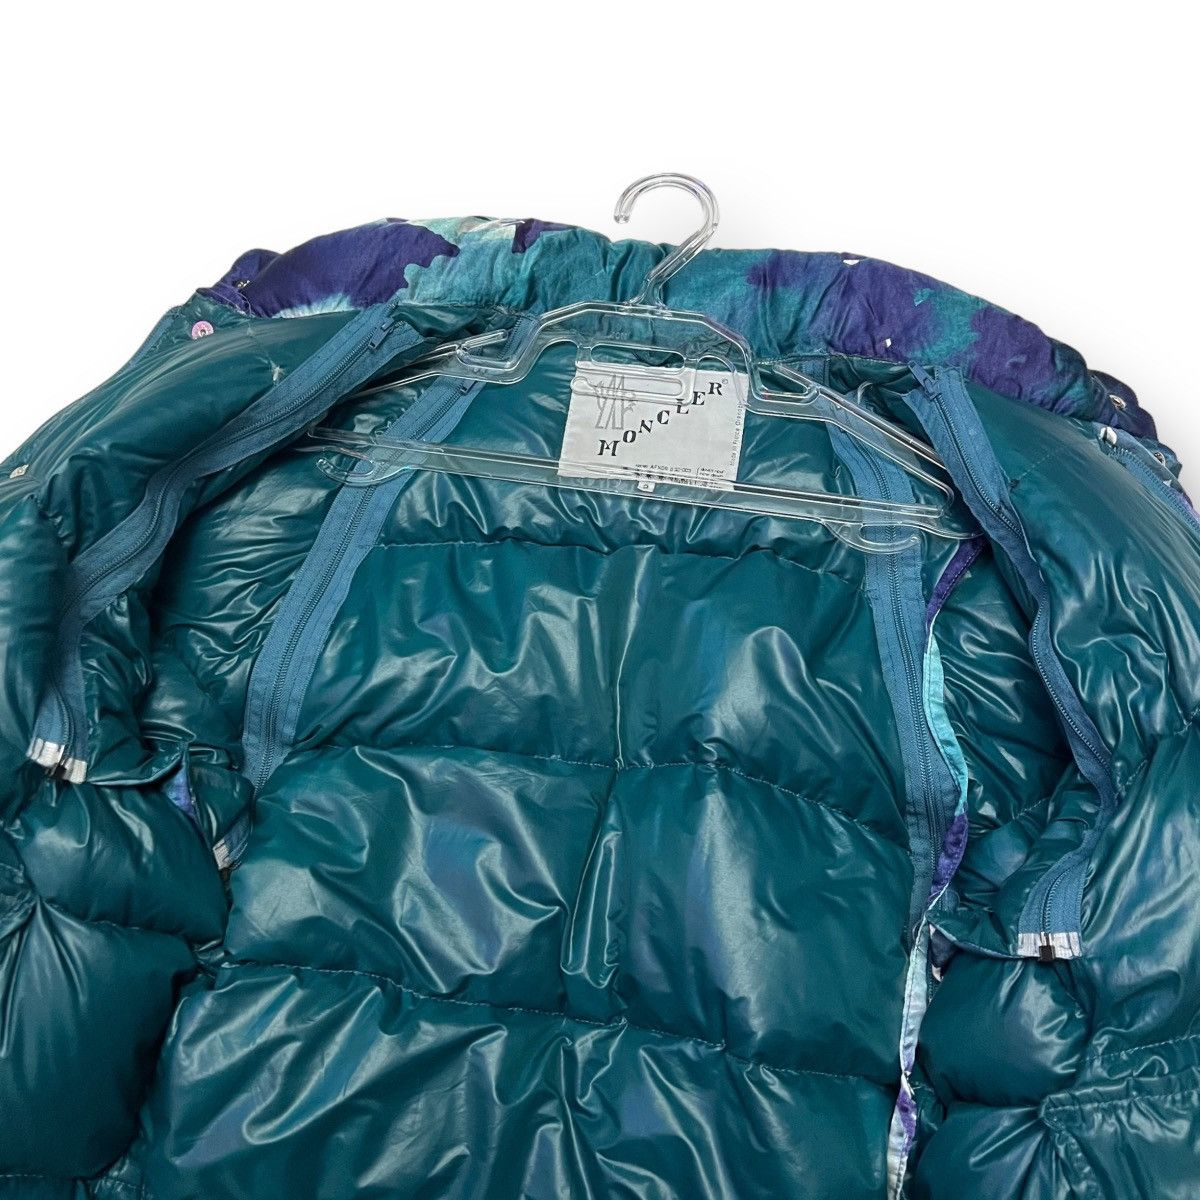 Moncler Moncler Grenoble rare vintage down jacket Size US M / EU 48-50 / 2 - 7 Thumbnail